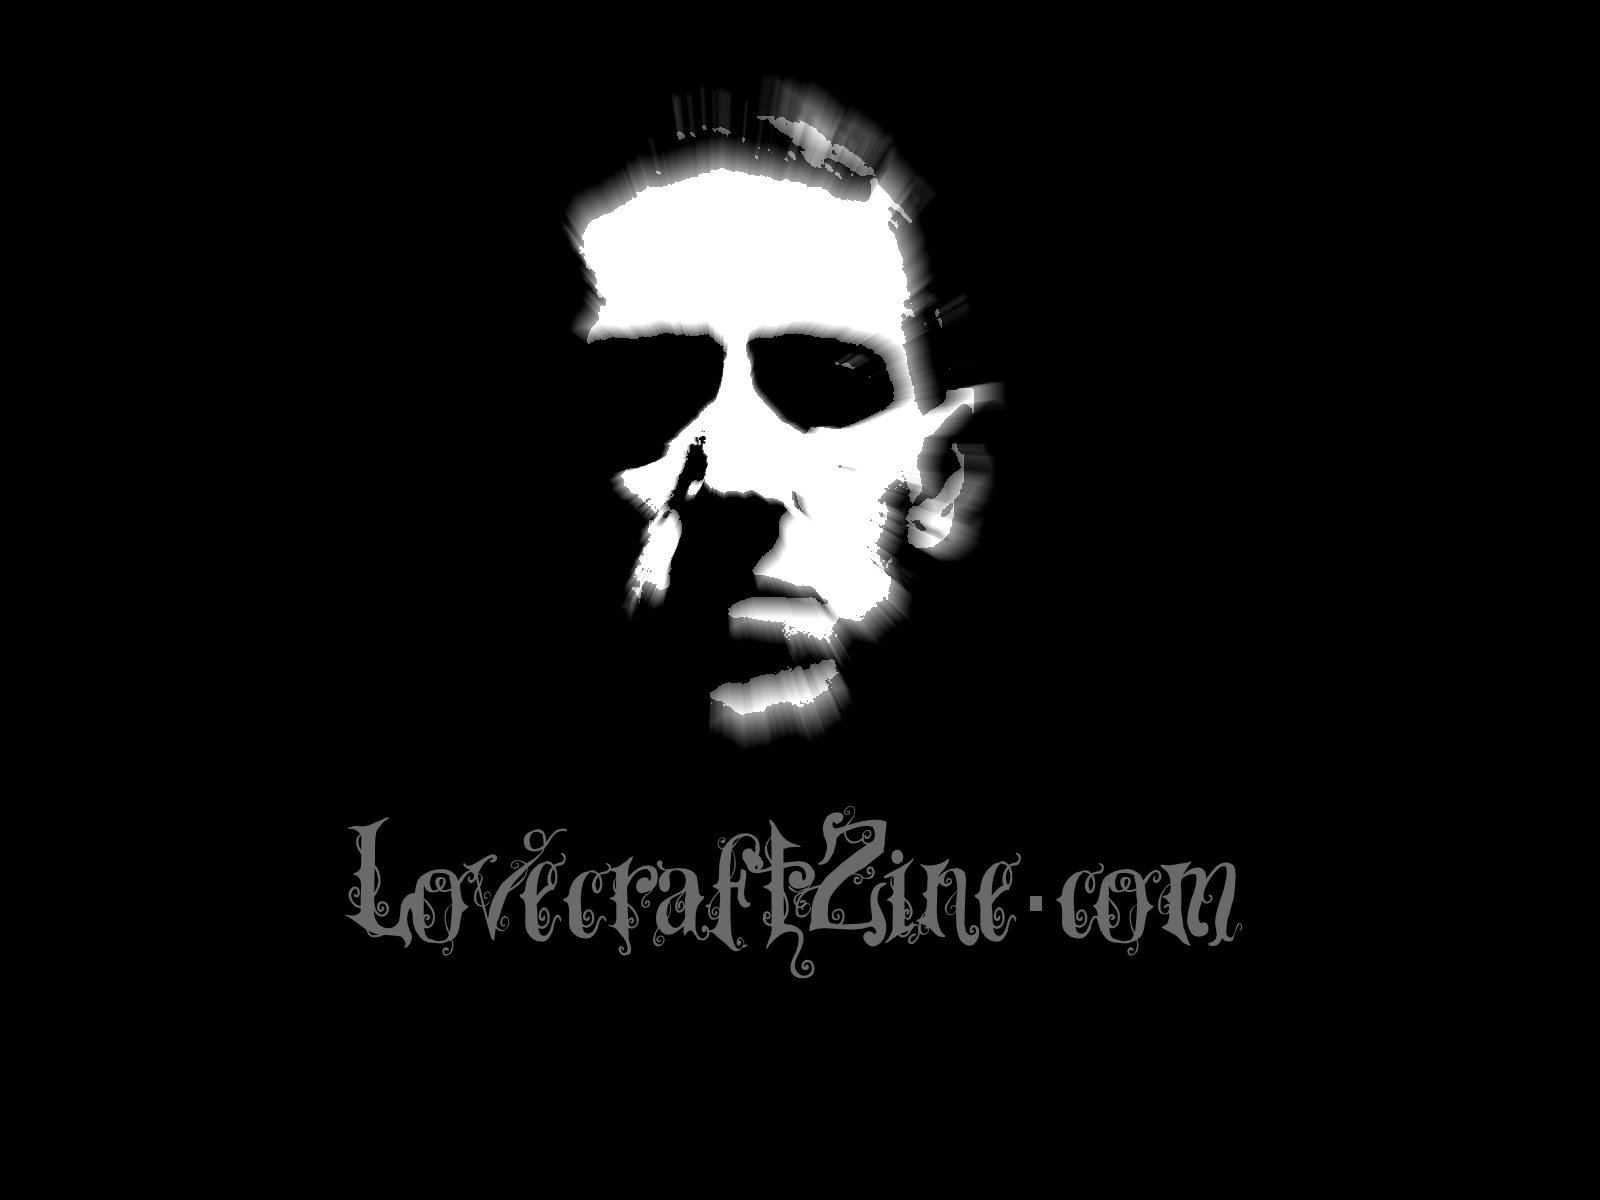 Lovecraft Ezine Wallpaper